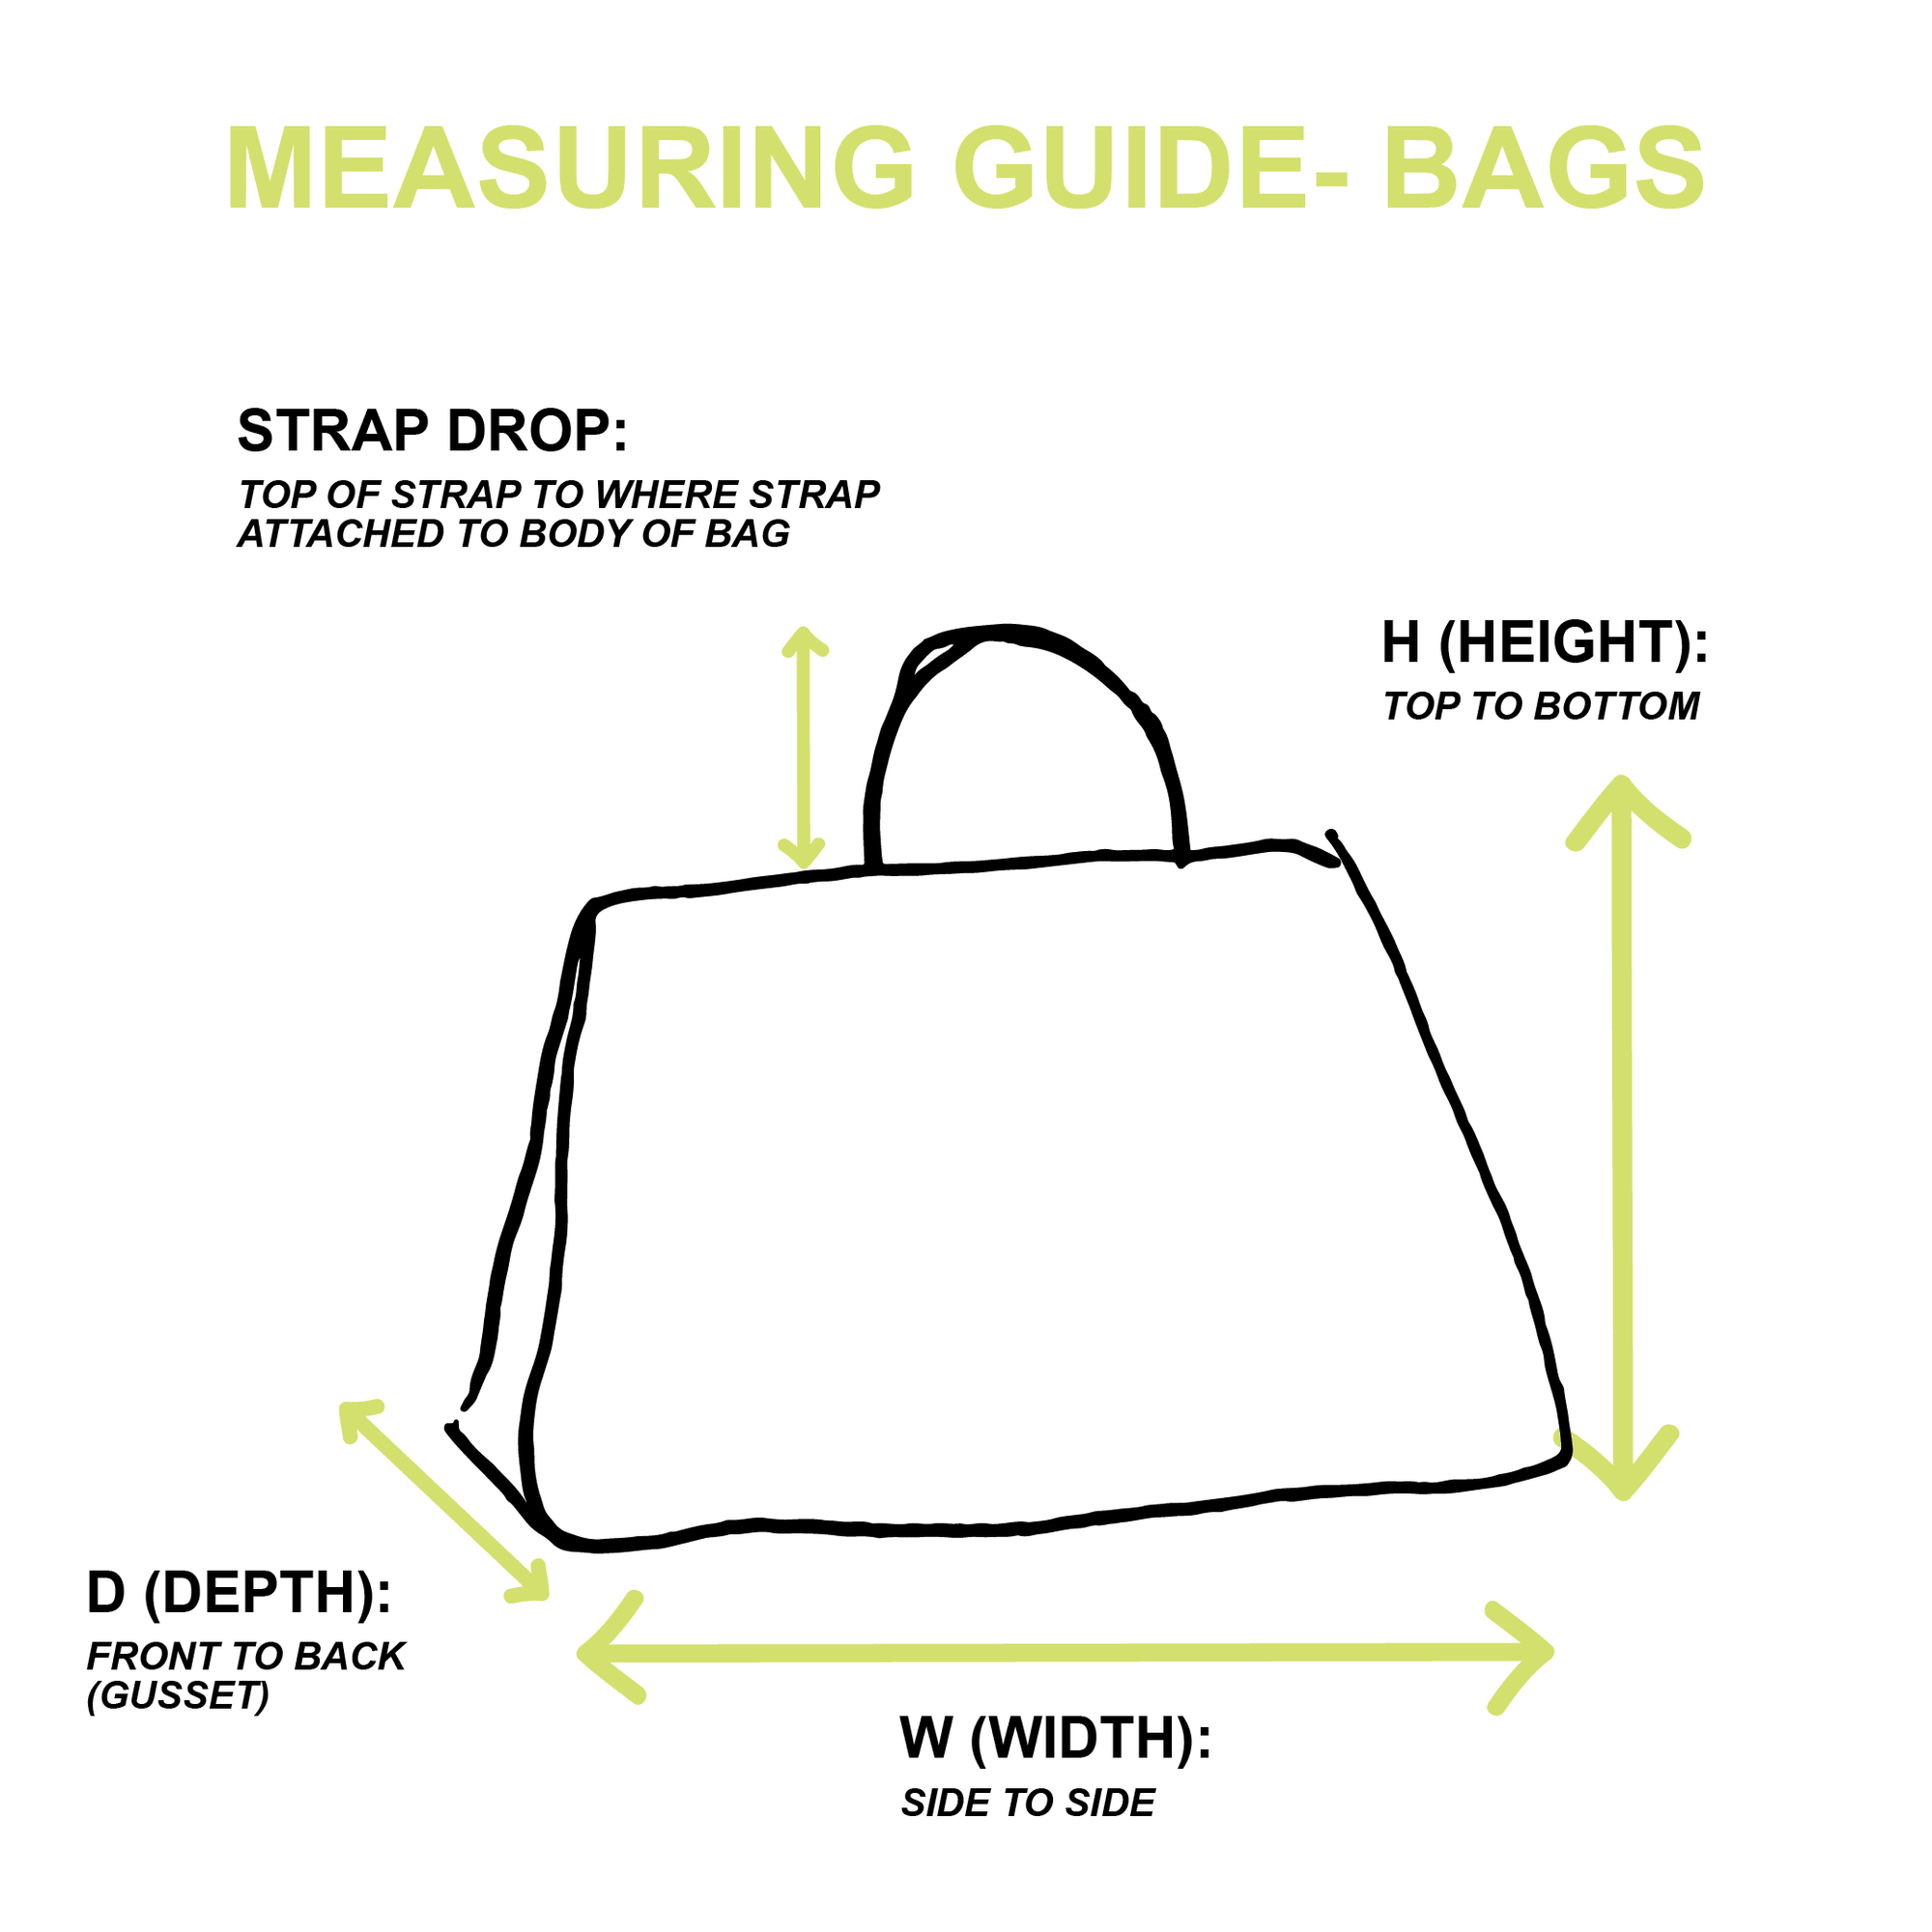 Louis Vuitton Brown Monogram Medium Cylinder Bag - Handbags